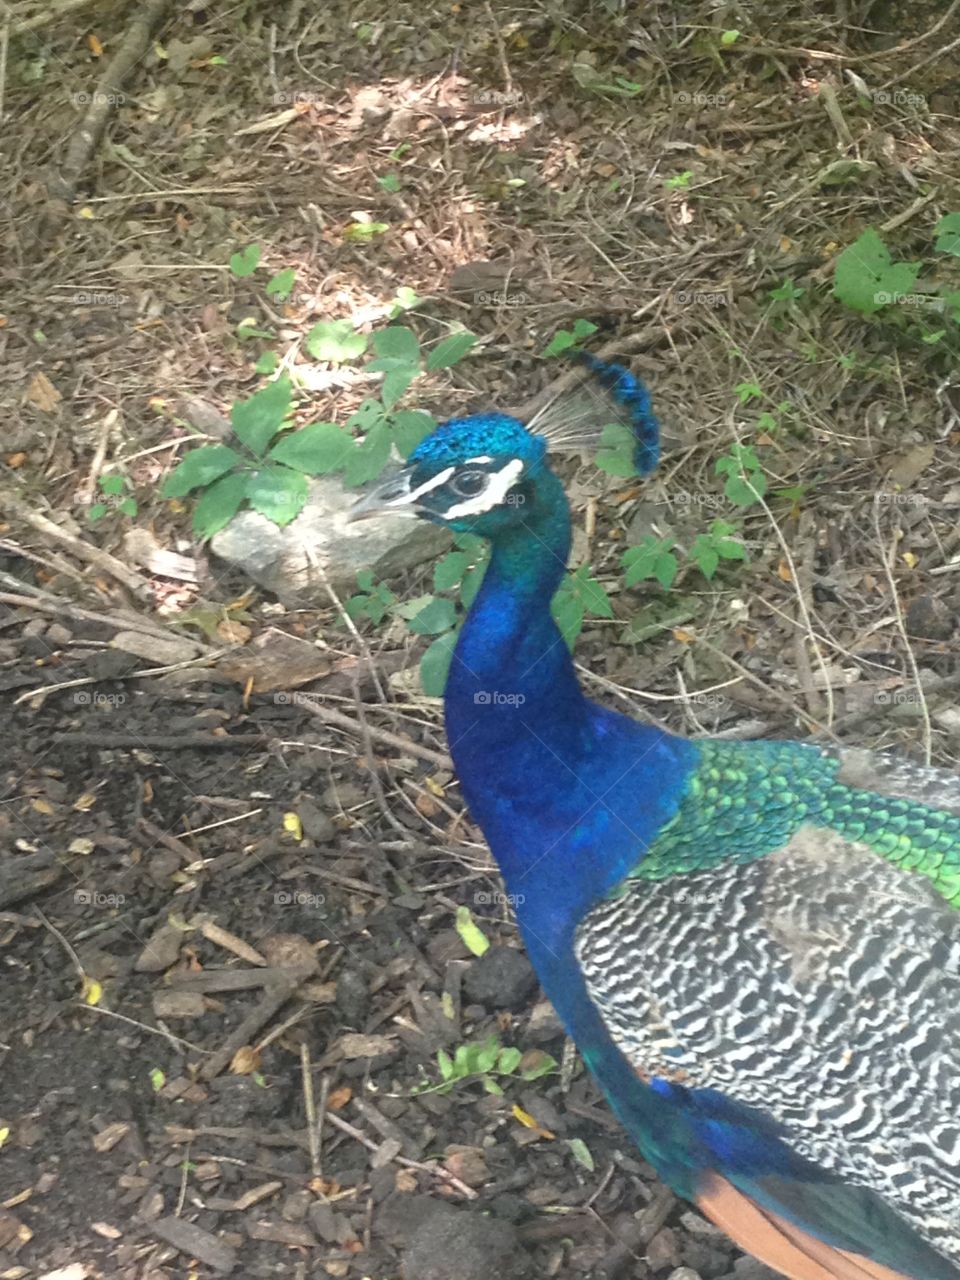 Peacock . Free range peacock at the Bronx zoo 